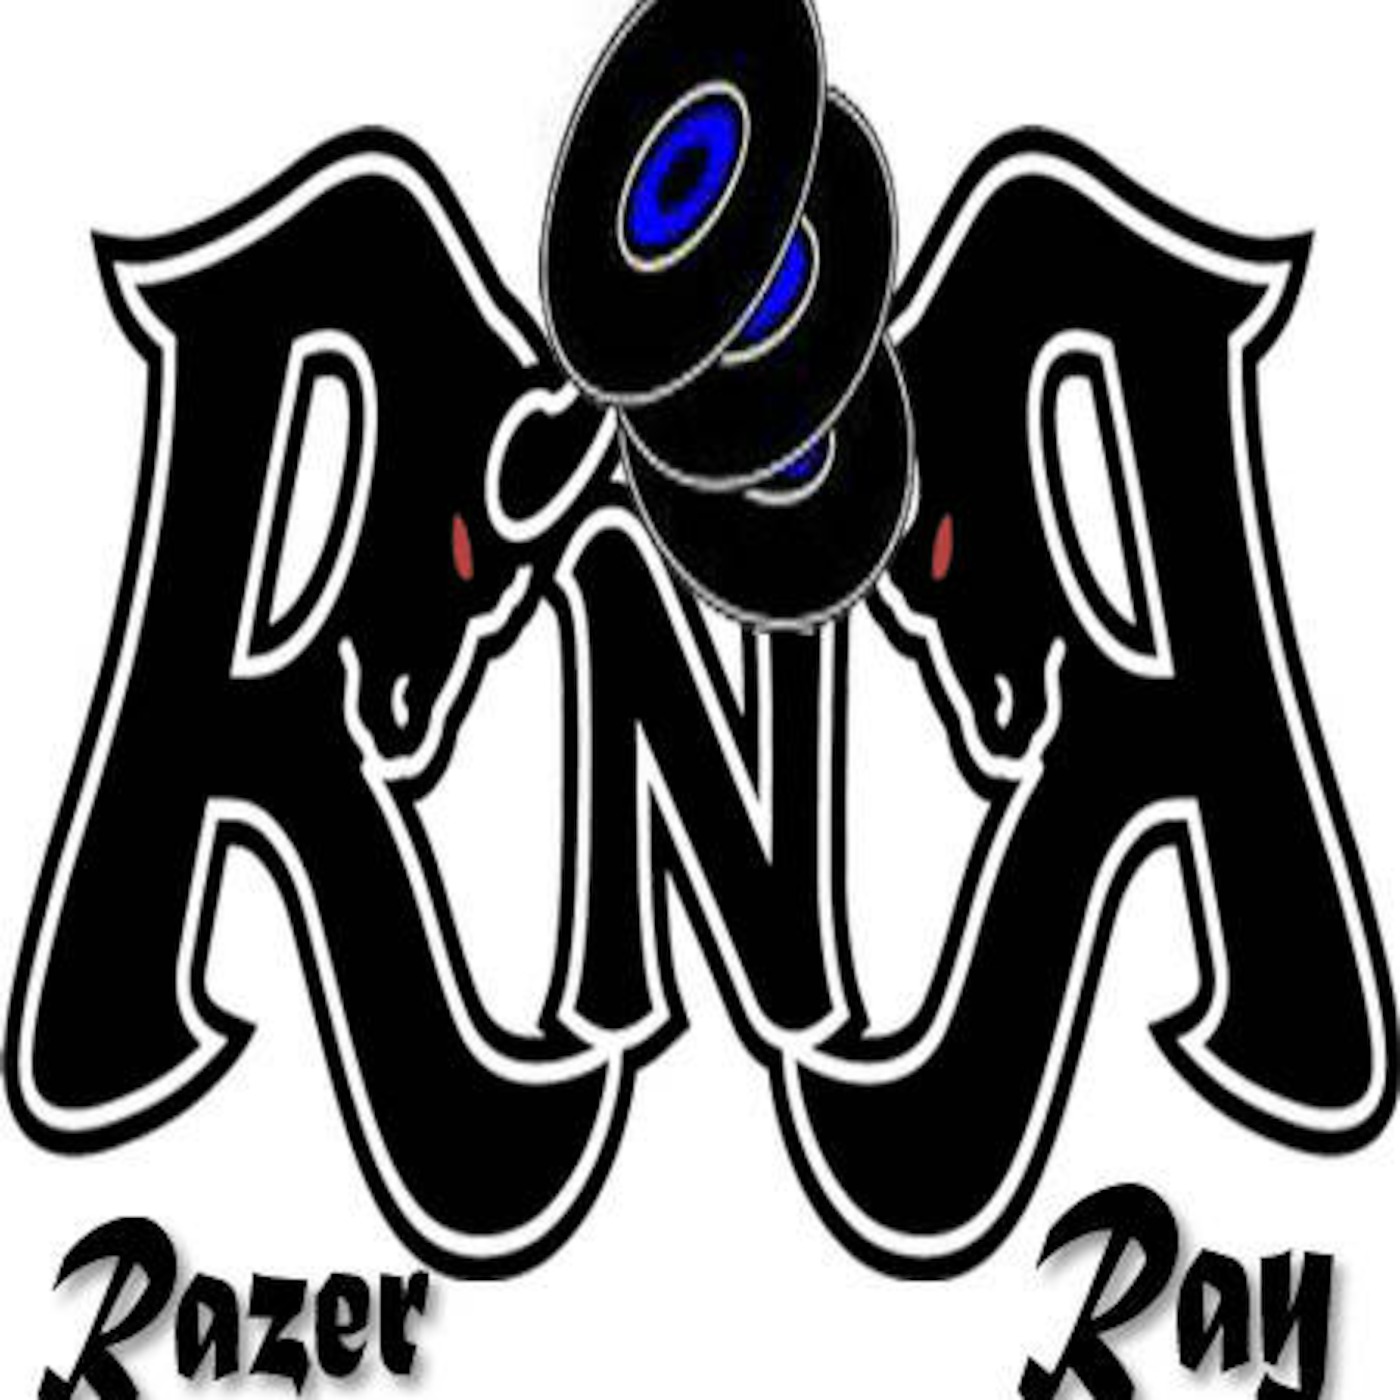 Razer Ray's podcast